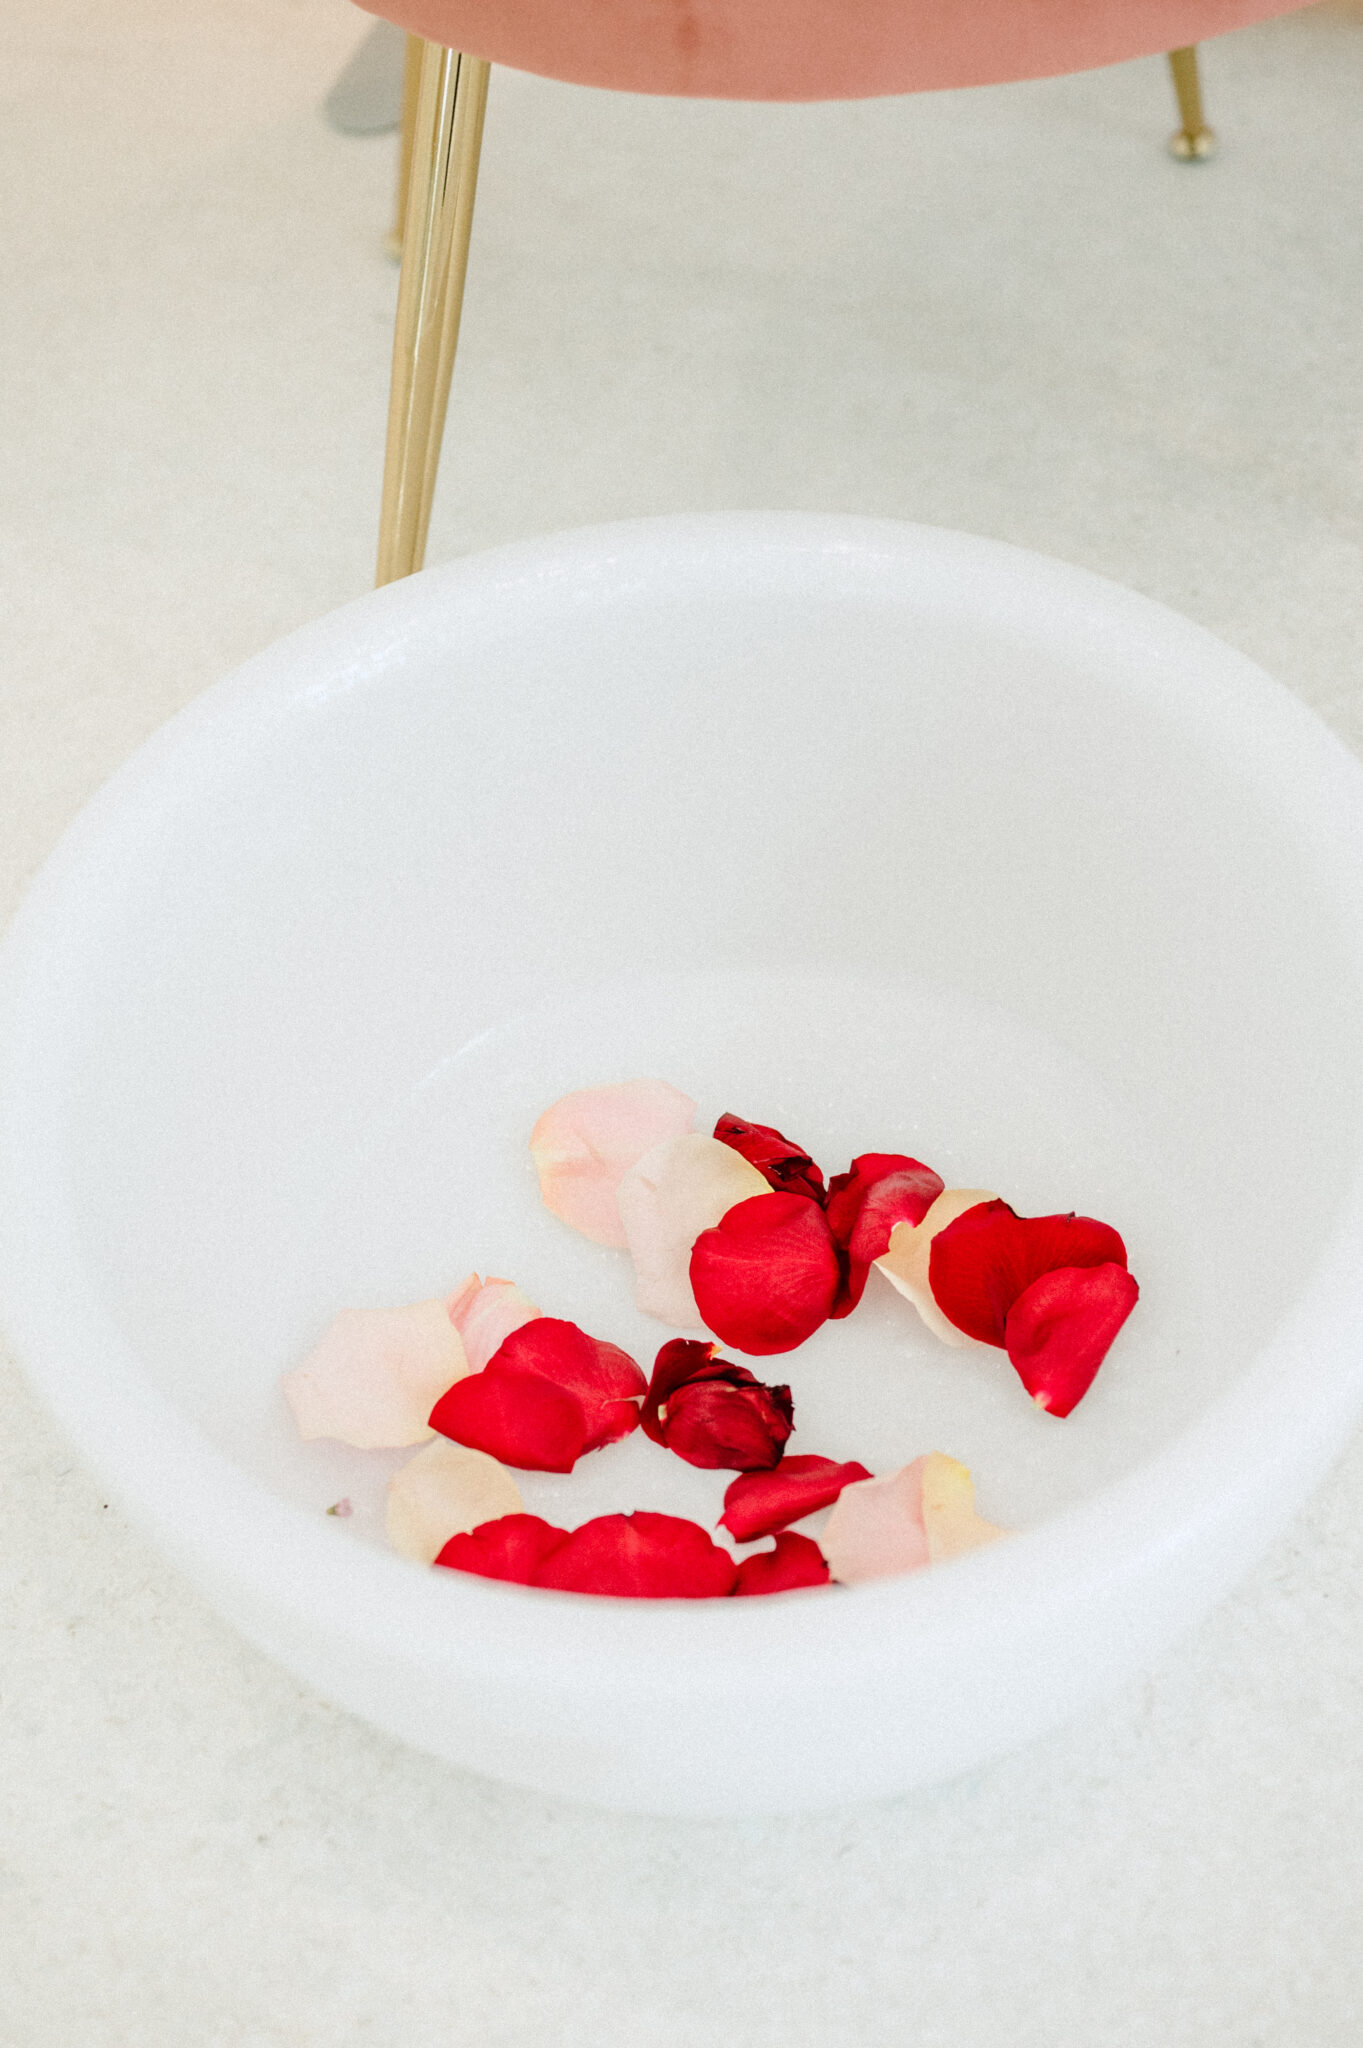 Rose petals in pedicure bowl